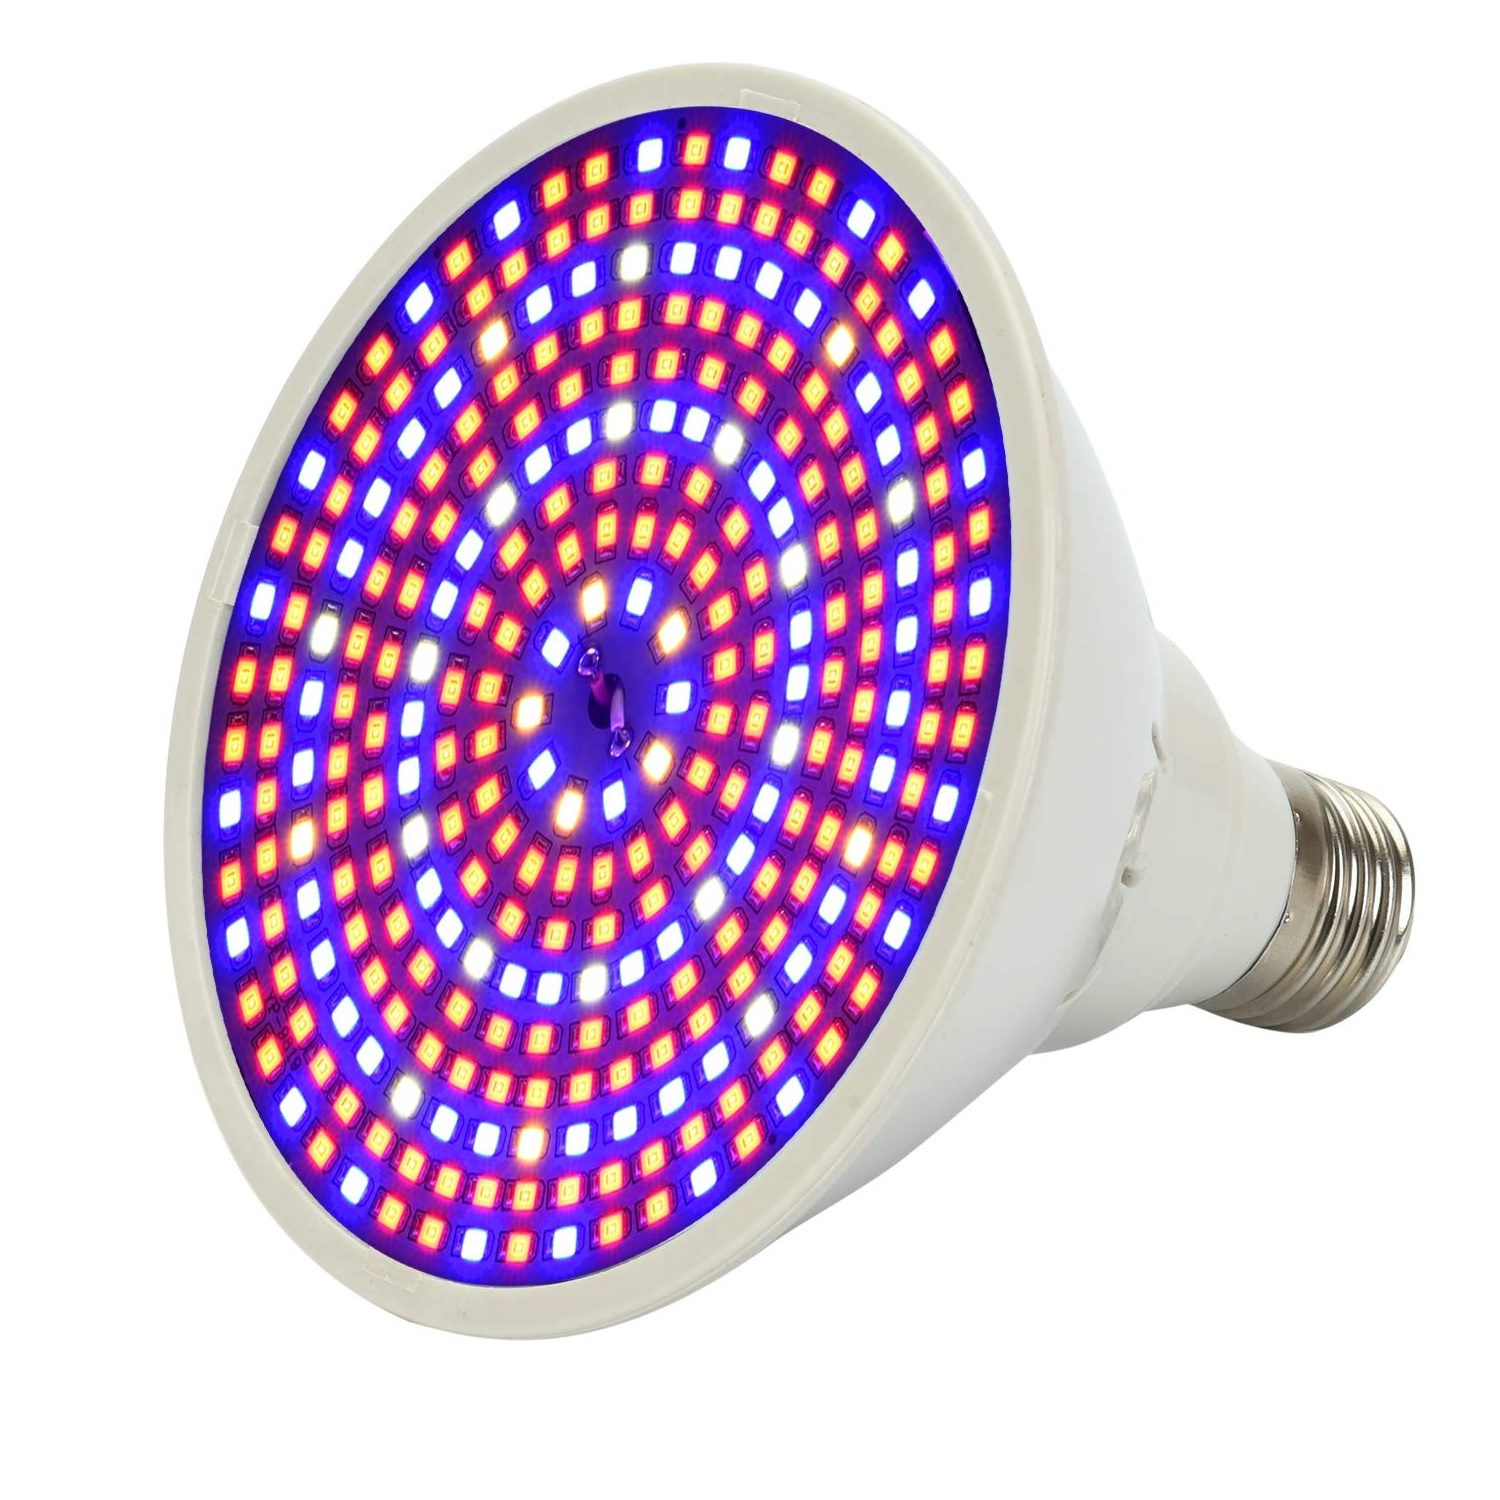 zonde Kenia Winkelier Led Kweeklamp - Groeilamp met E27 fitting - 300 LEDs - Full Spectrum lamp  met grote fitting - LedlampshopXL